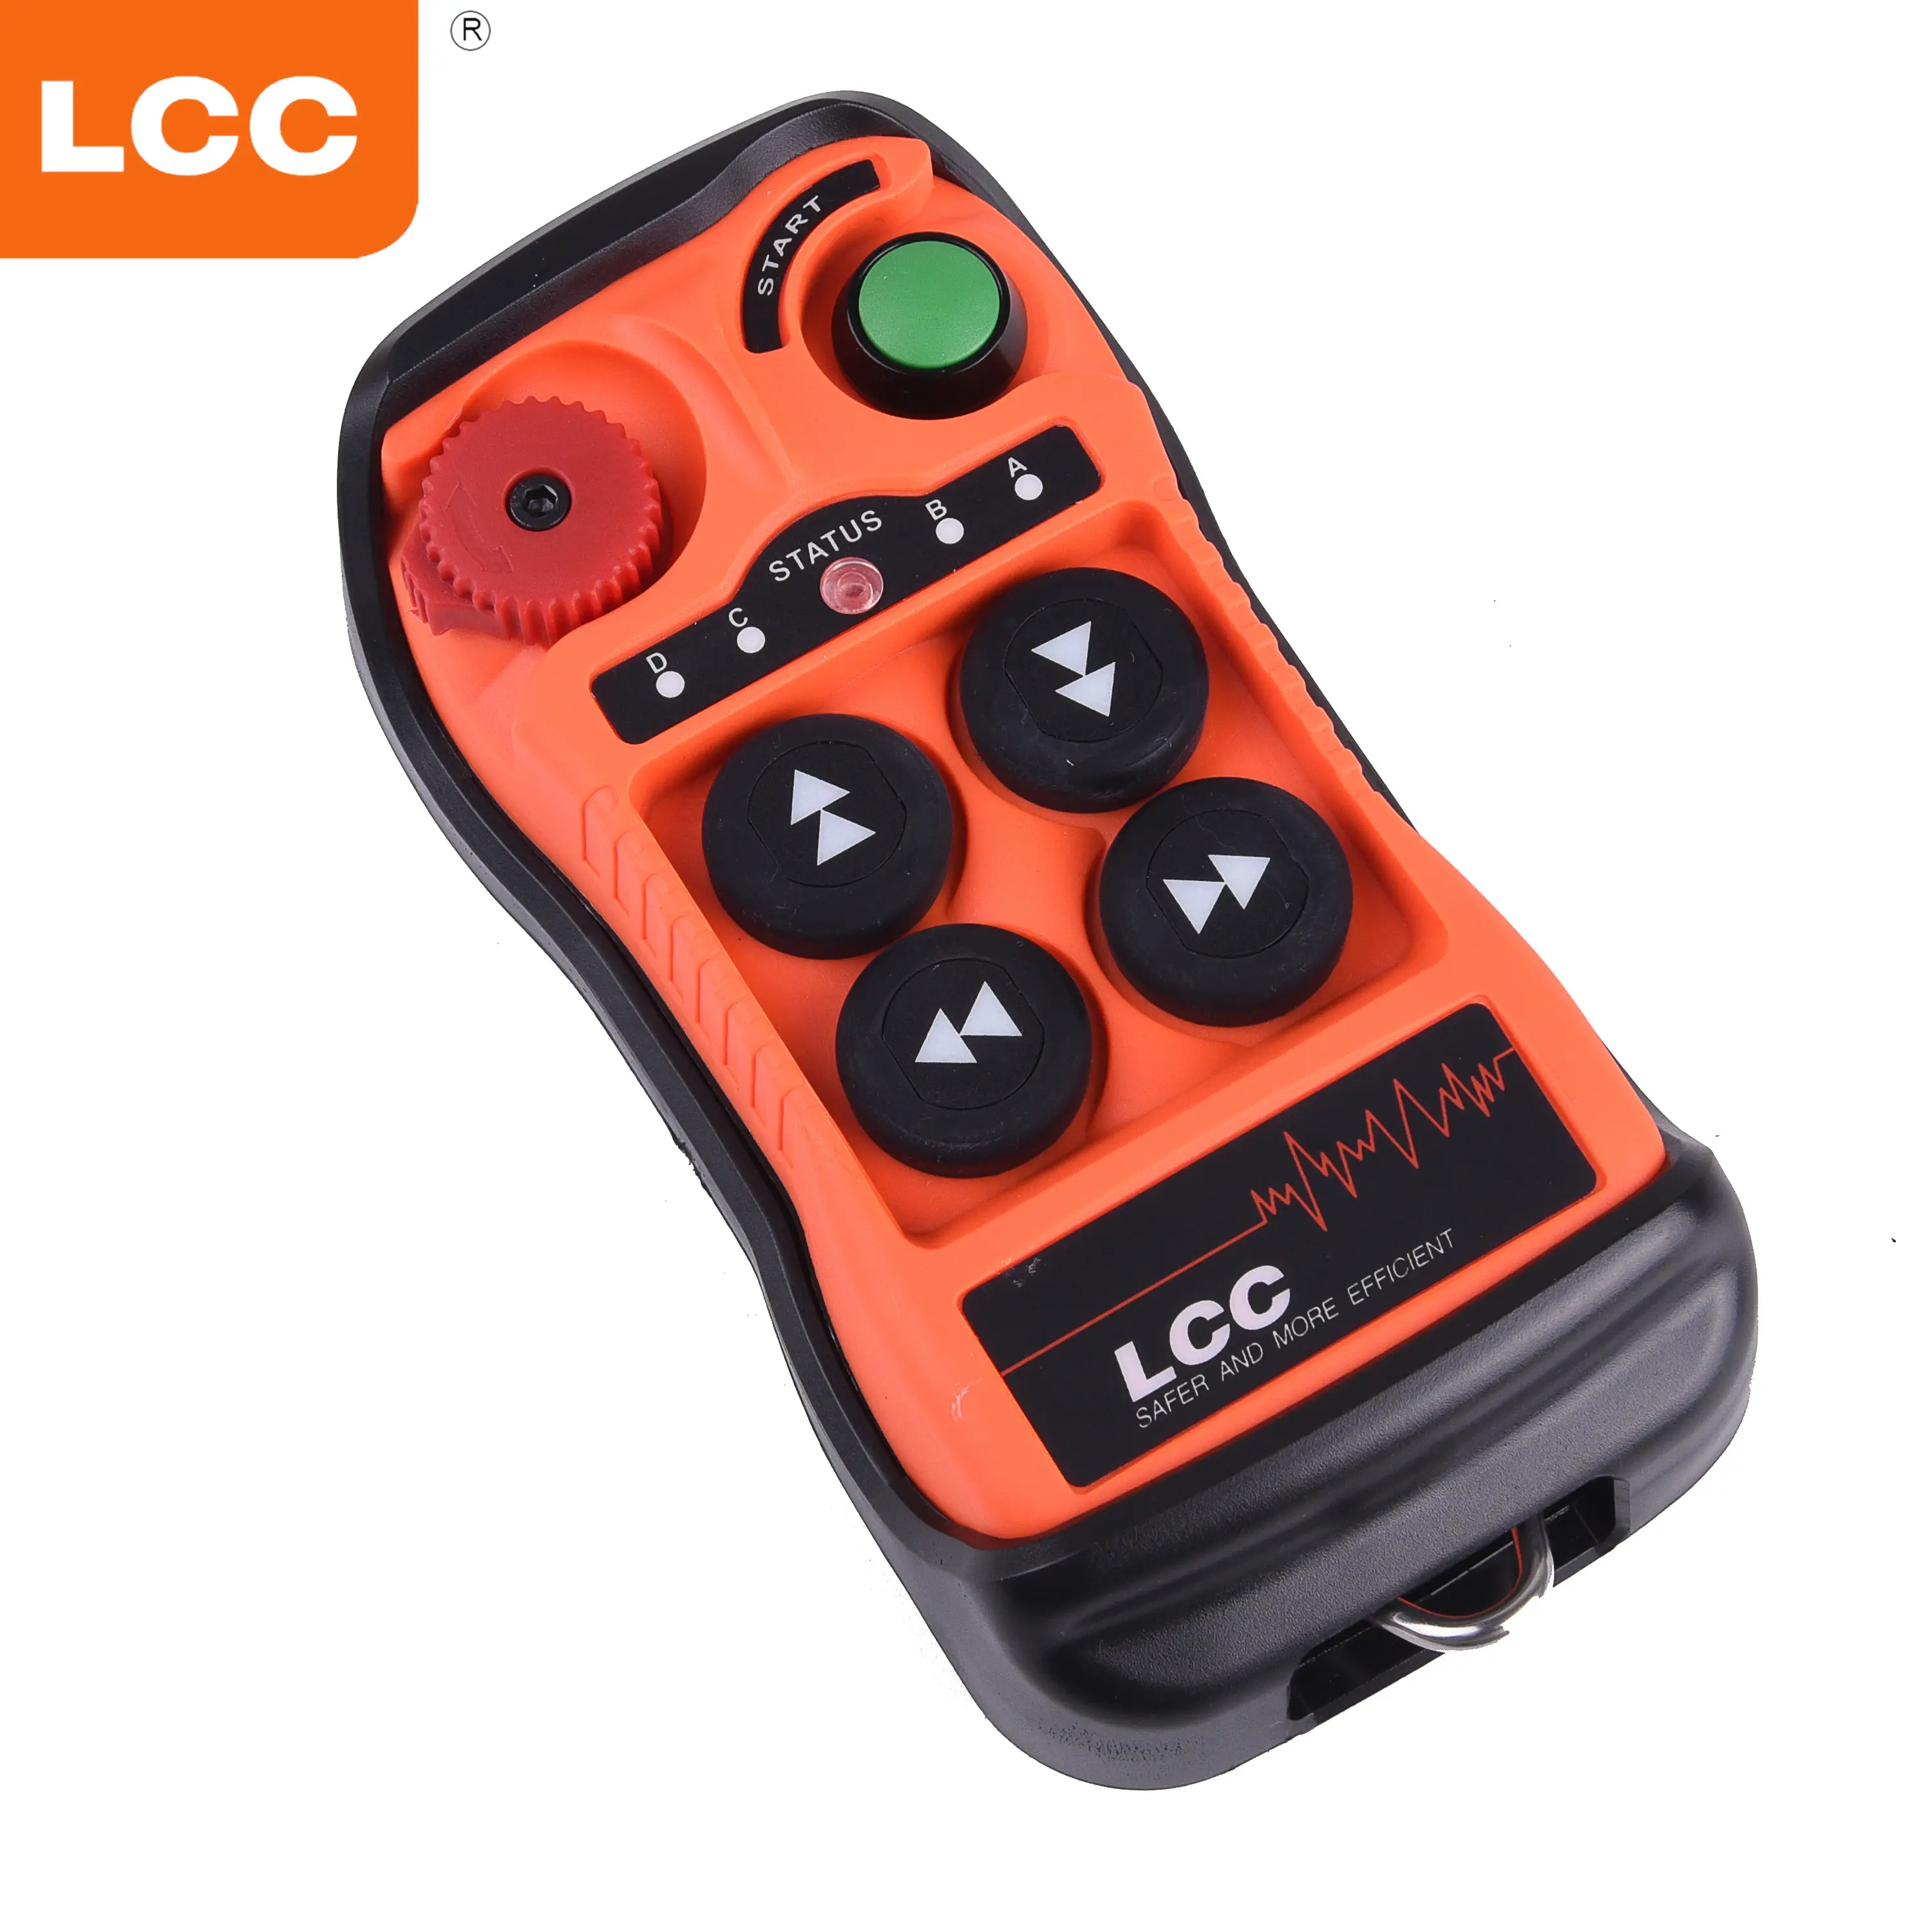 LCC Q400 telecrane Crane forklift industrial wireless remote control for electric winch